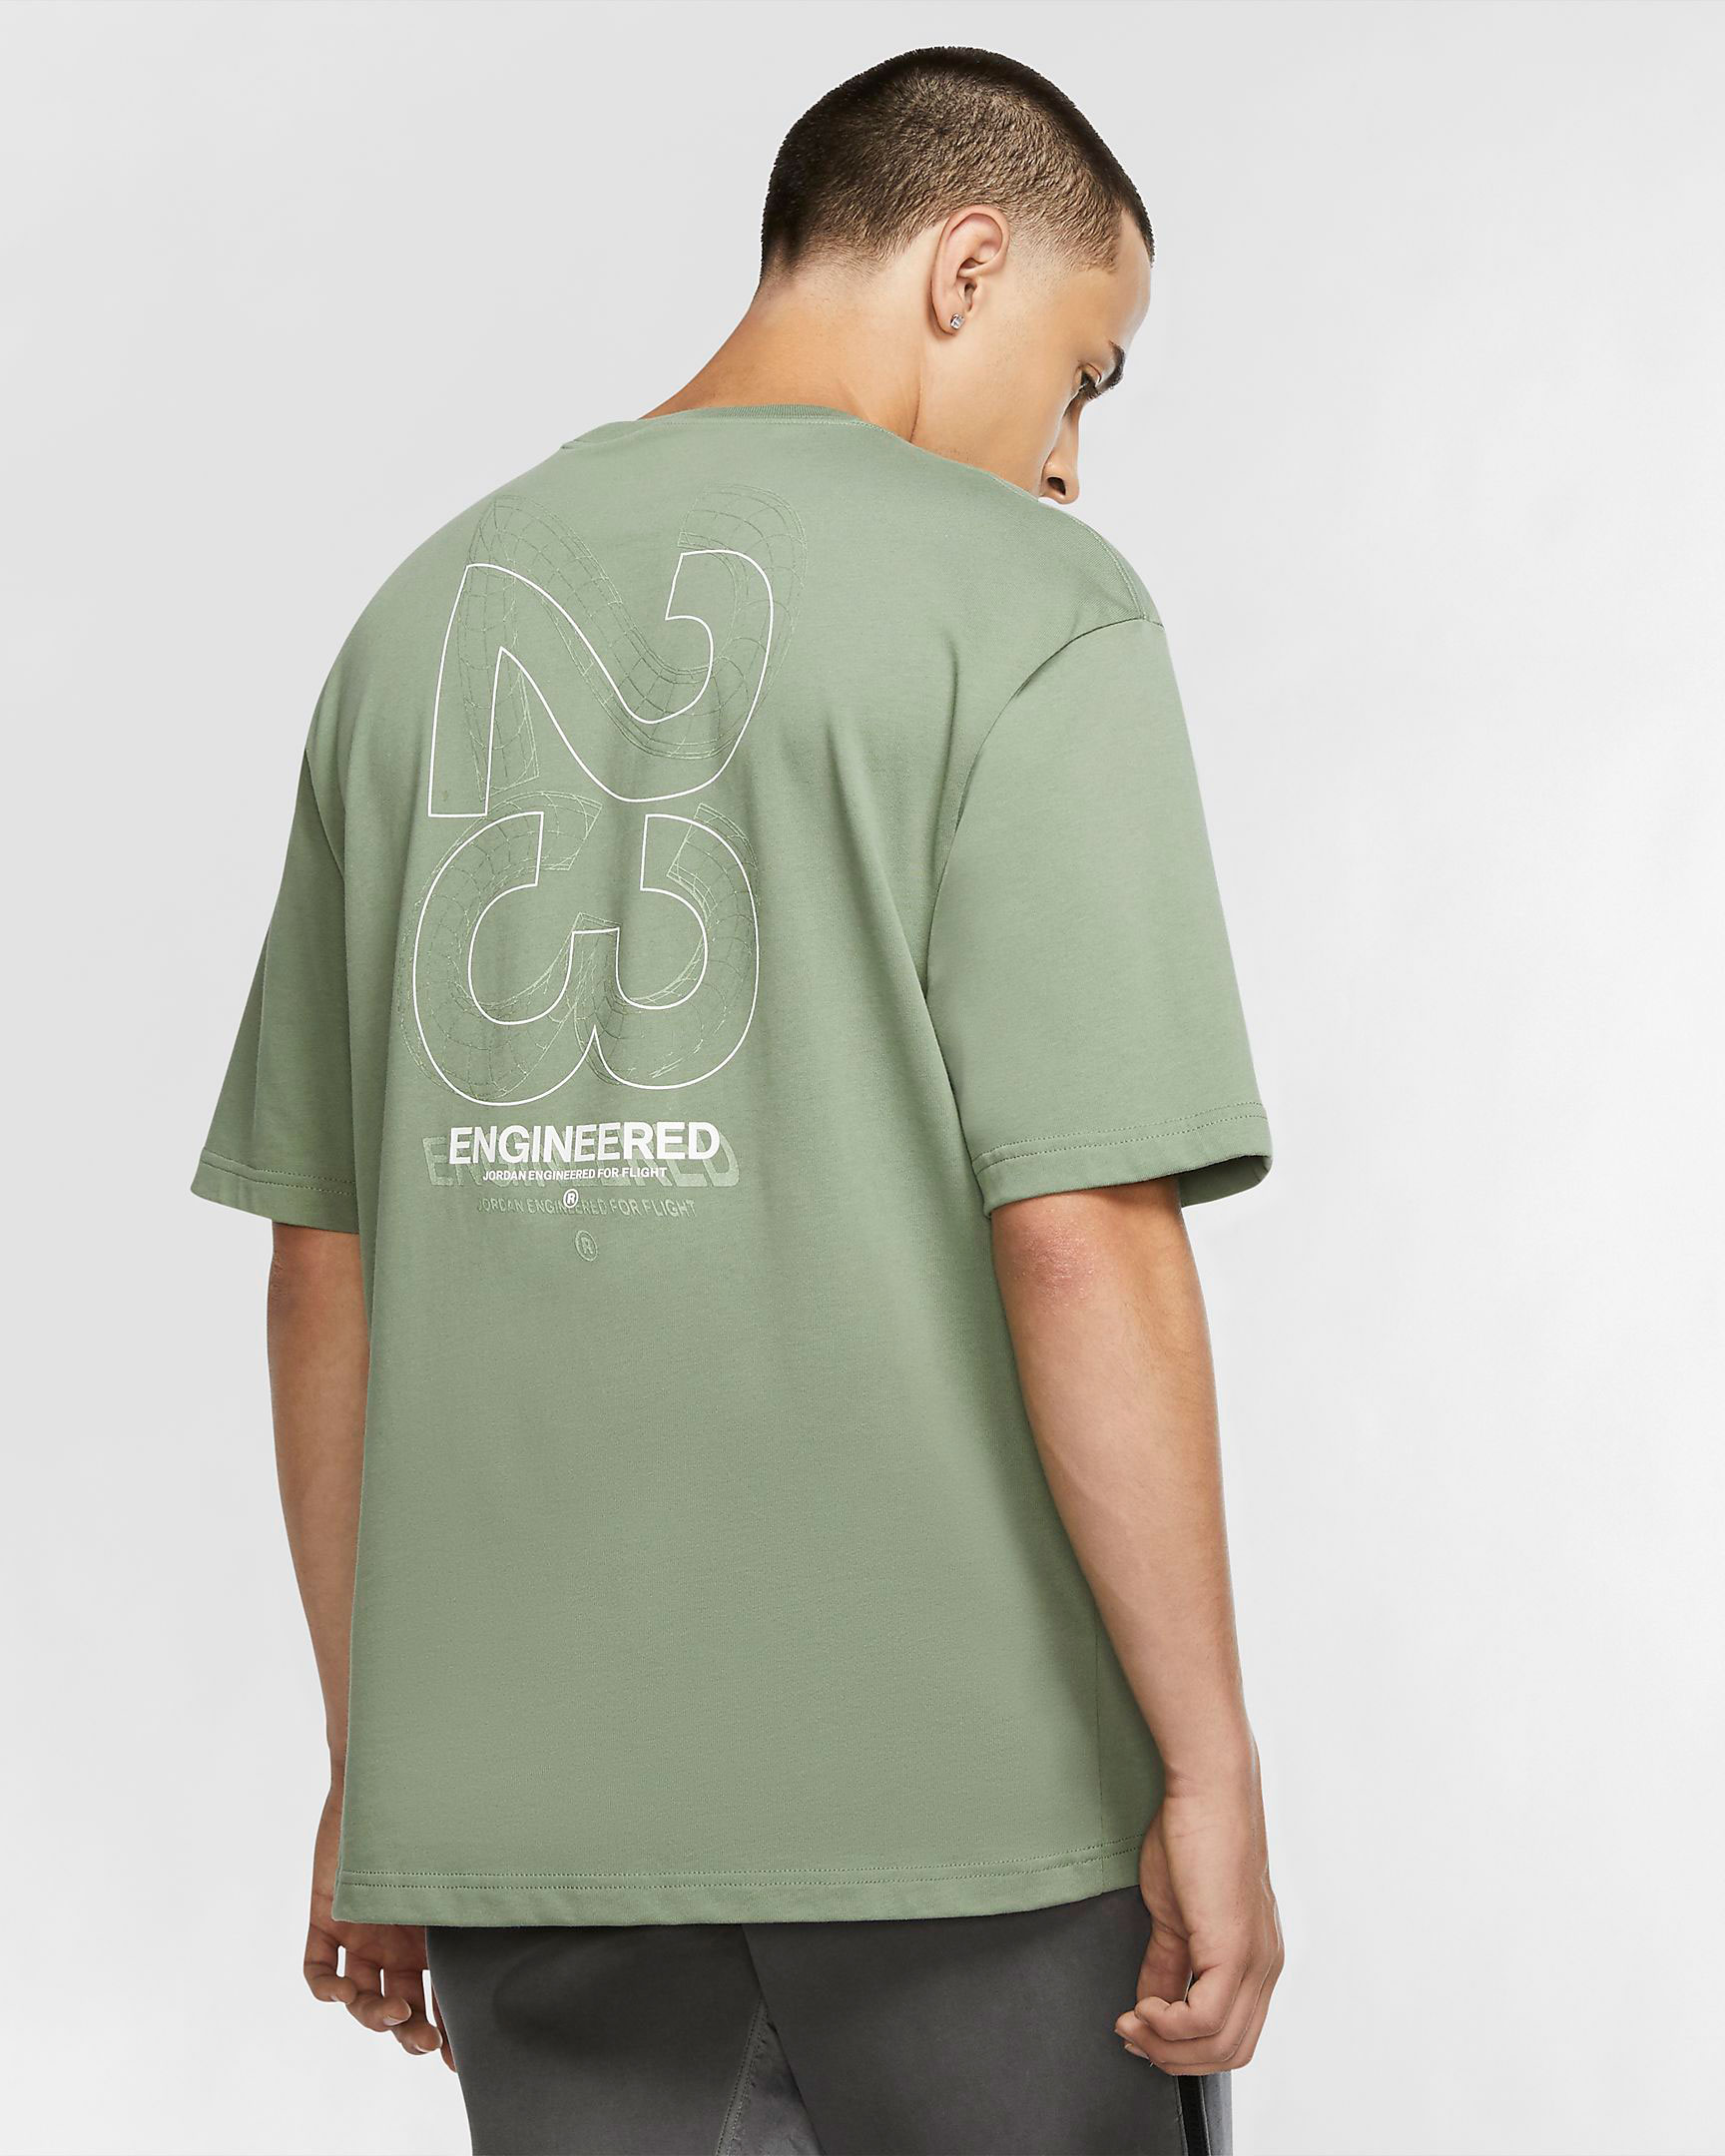 jordan-23-engineered-tee-shirt-sage-green-2